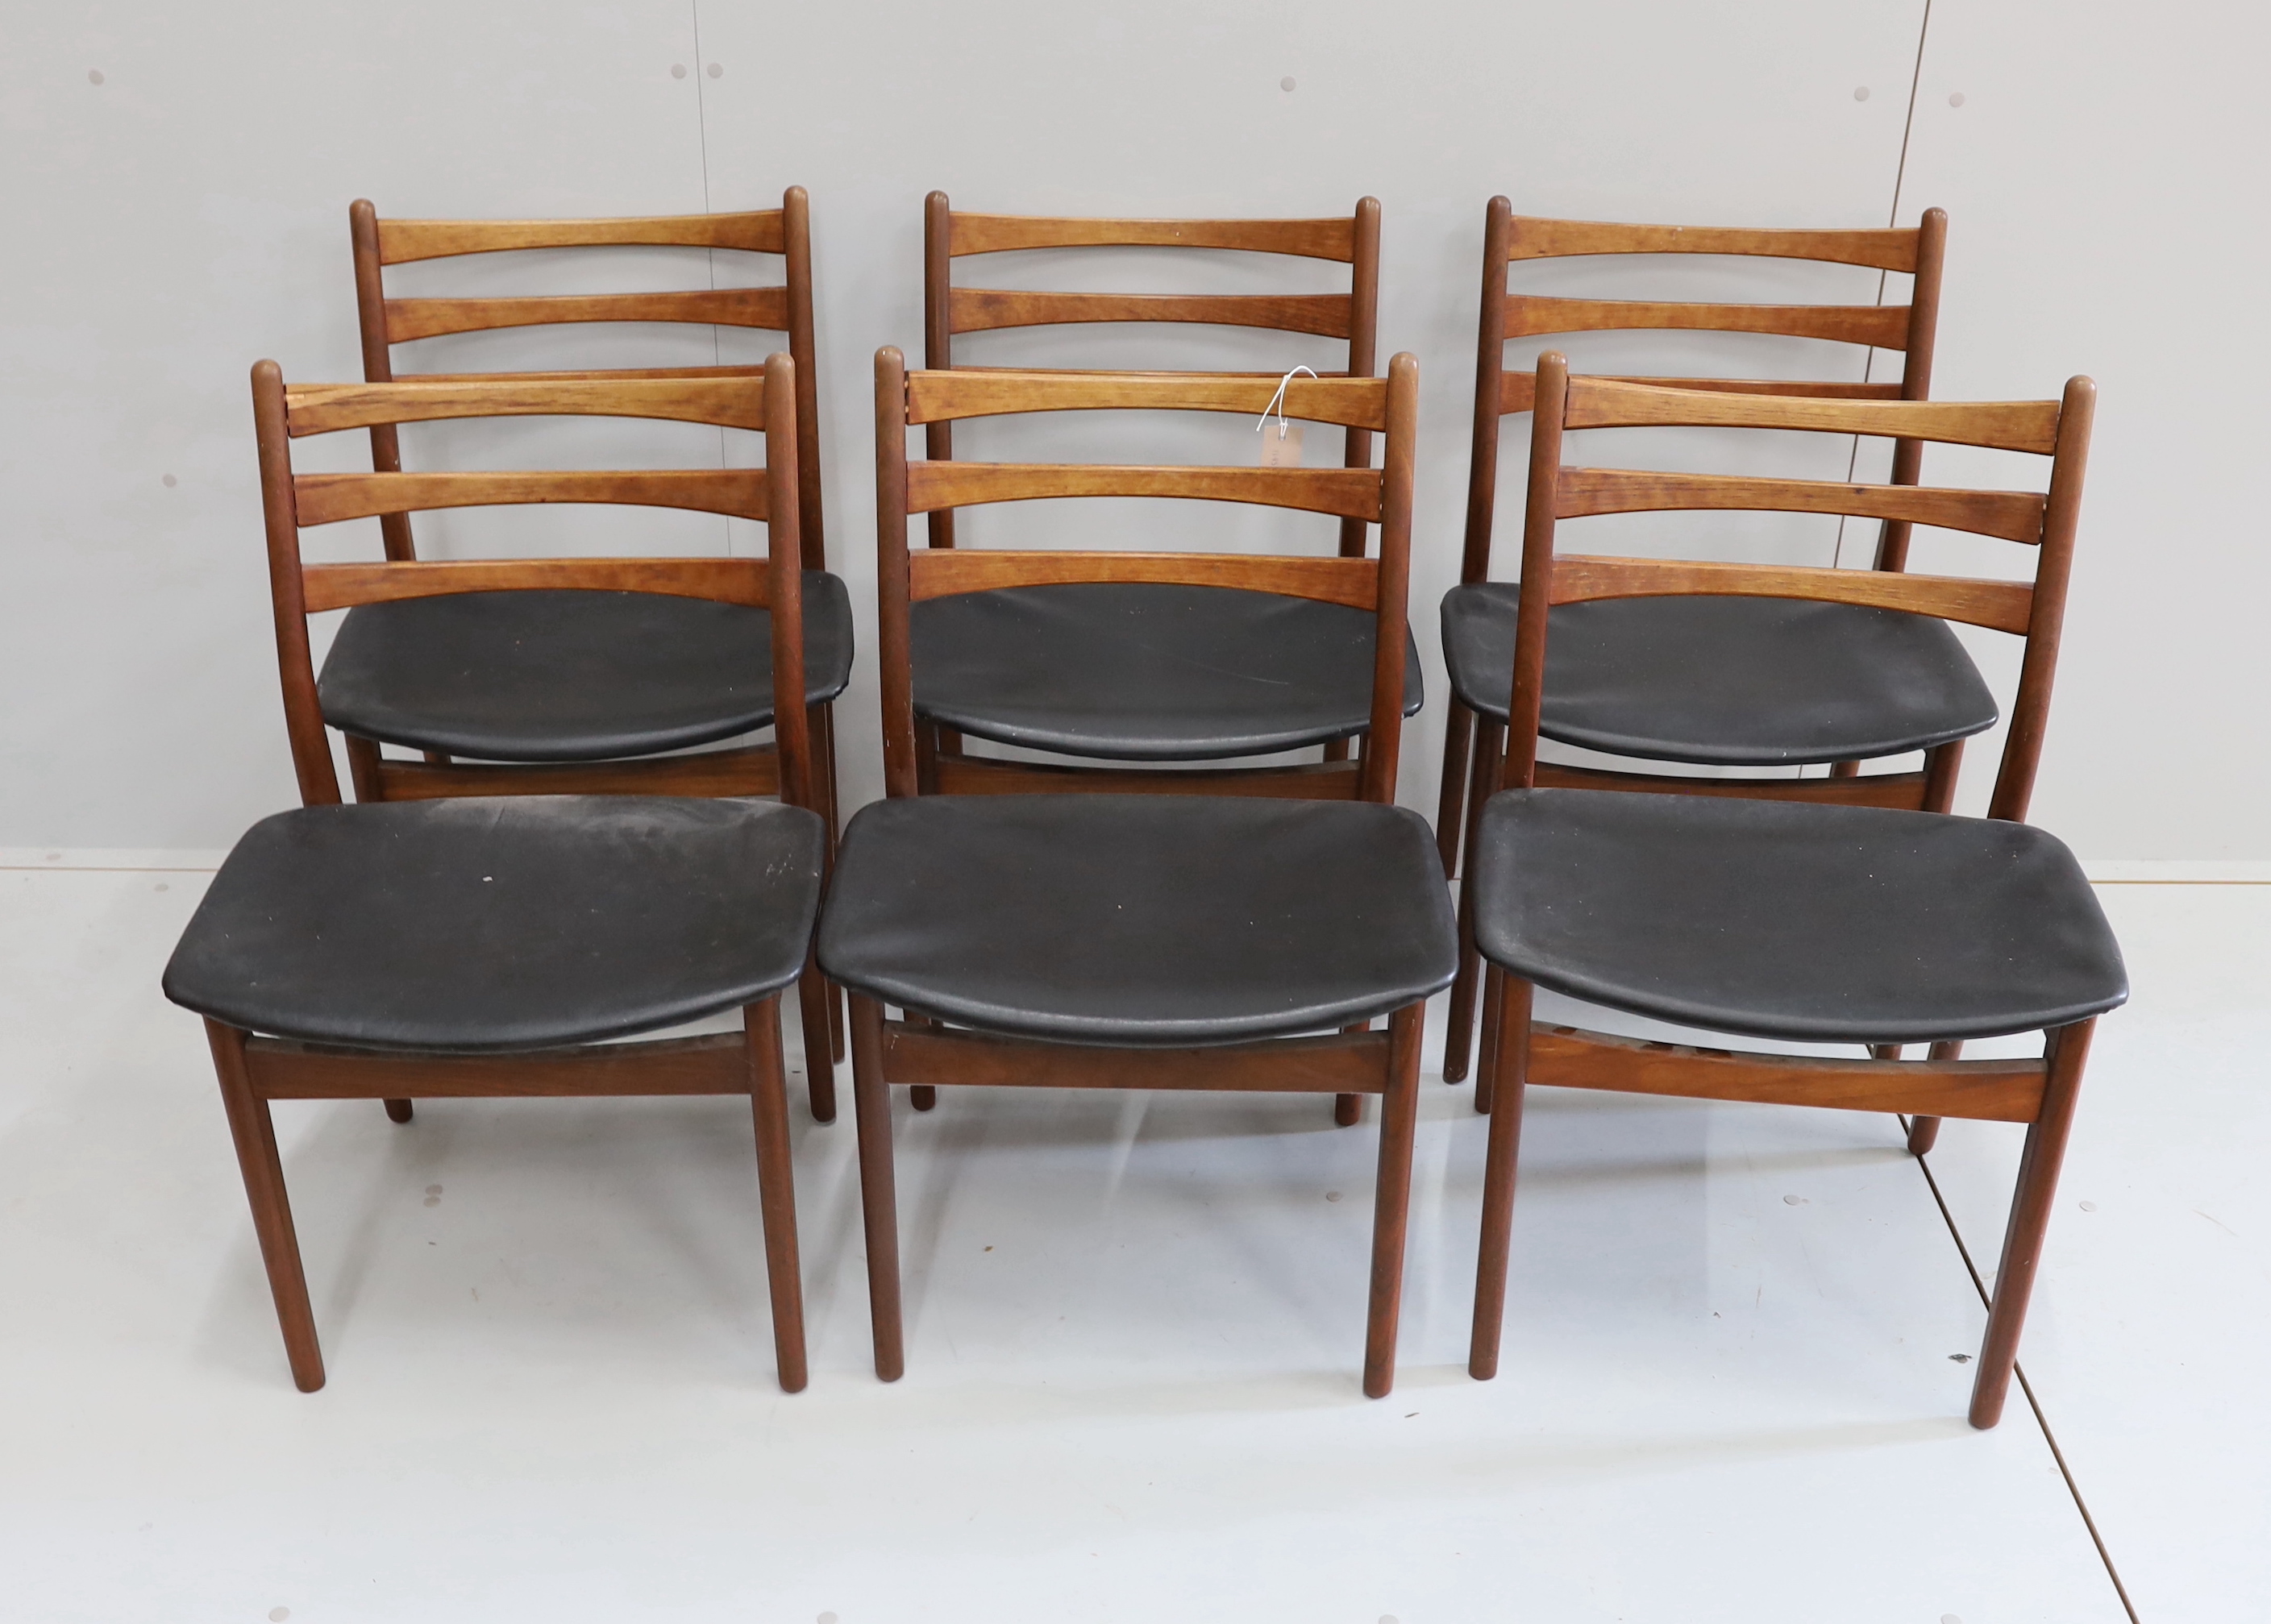 A set of six mid century, Danish design, teak and black leatherette dining chairs, width 50cm, depth 40cm, height 80cm